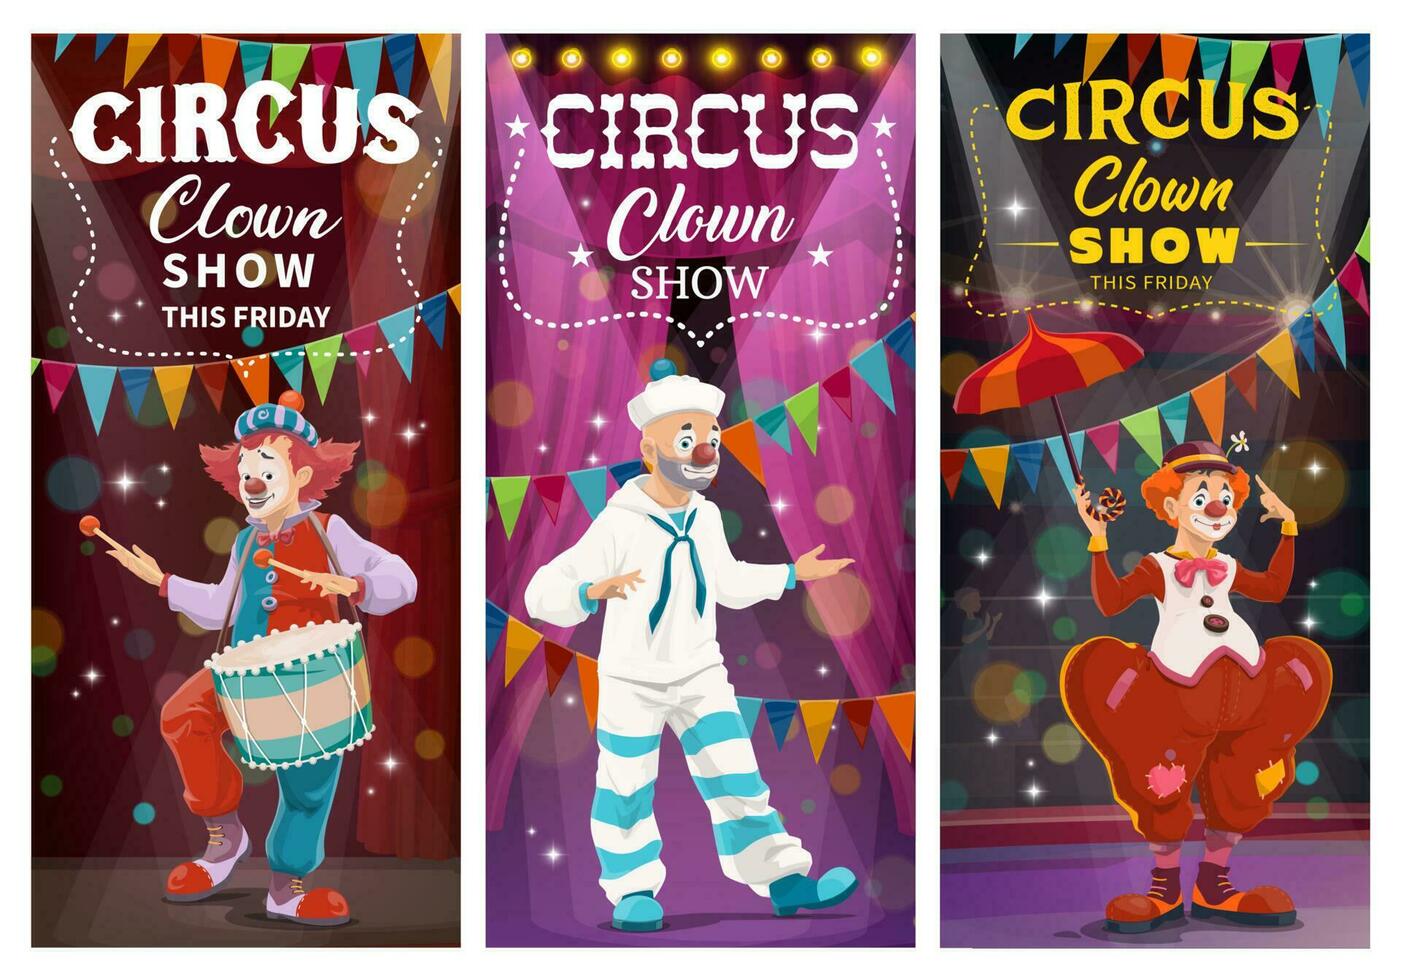 Circus clowns comedy show cartoon vector banners